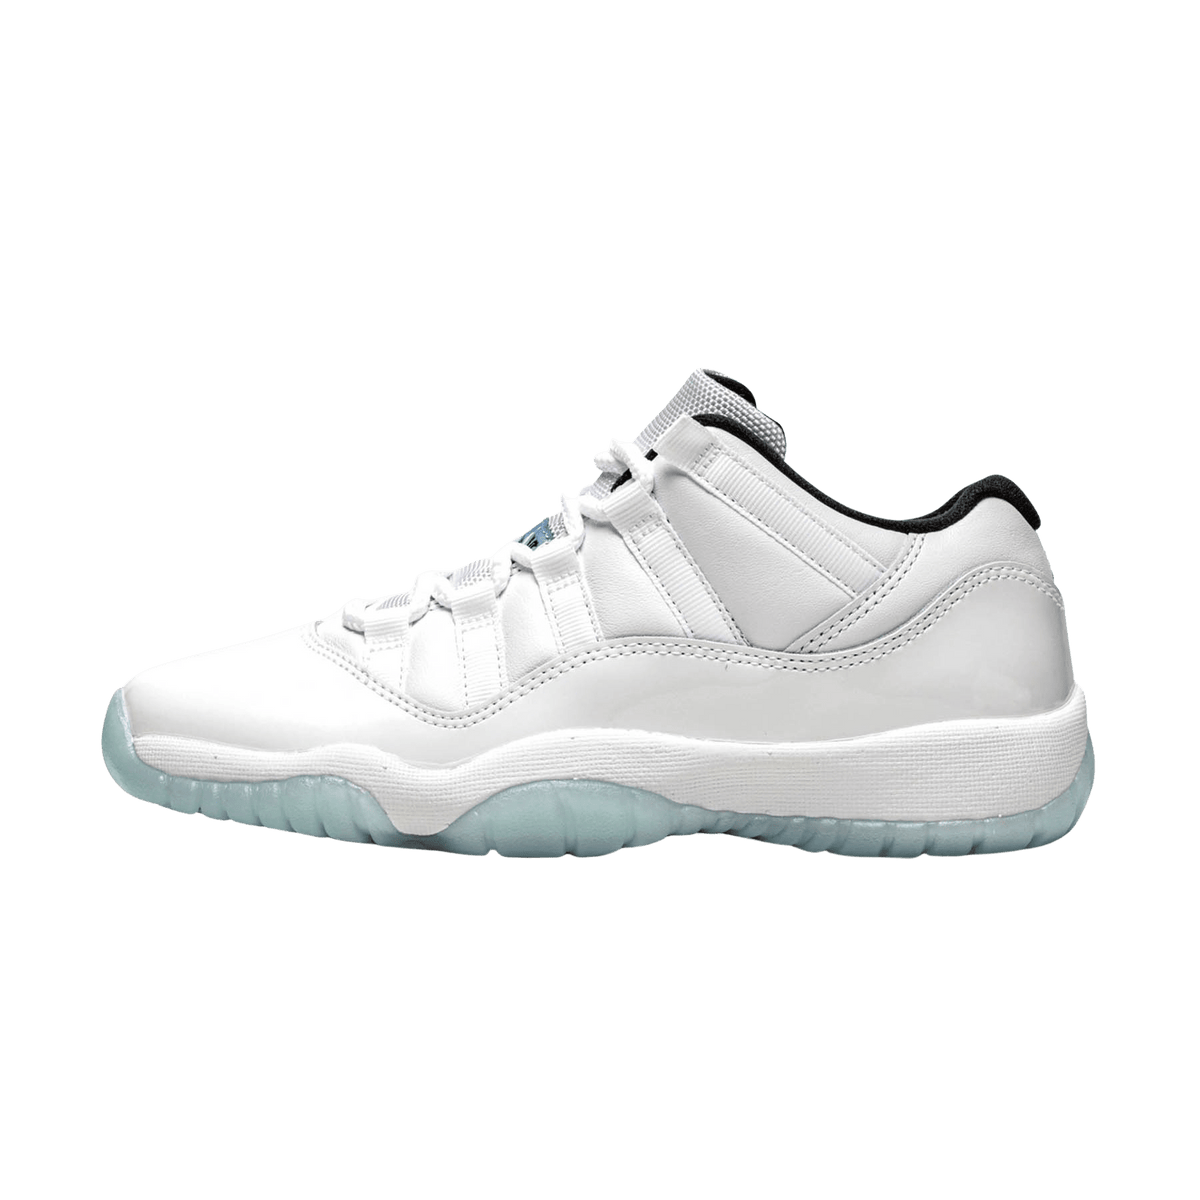 Louis Vuitton Green Camo Air Jordan 11 Sneakers Shoes Hot 2022 LV Gifts  Unisex